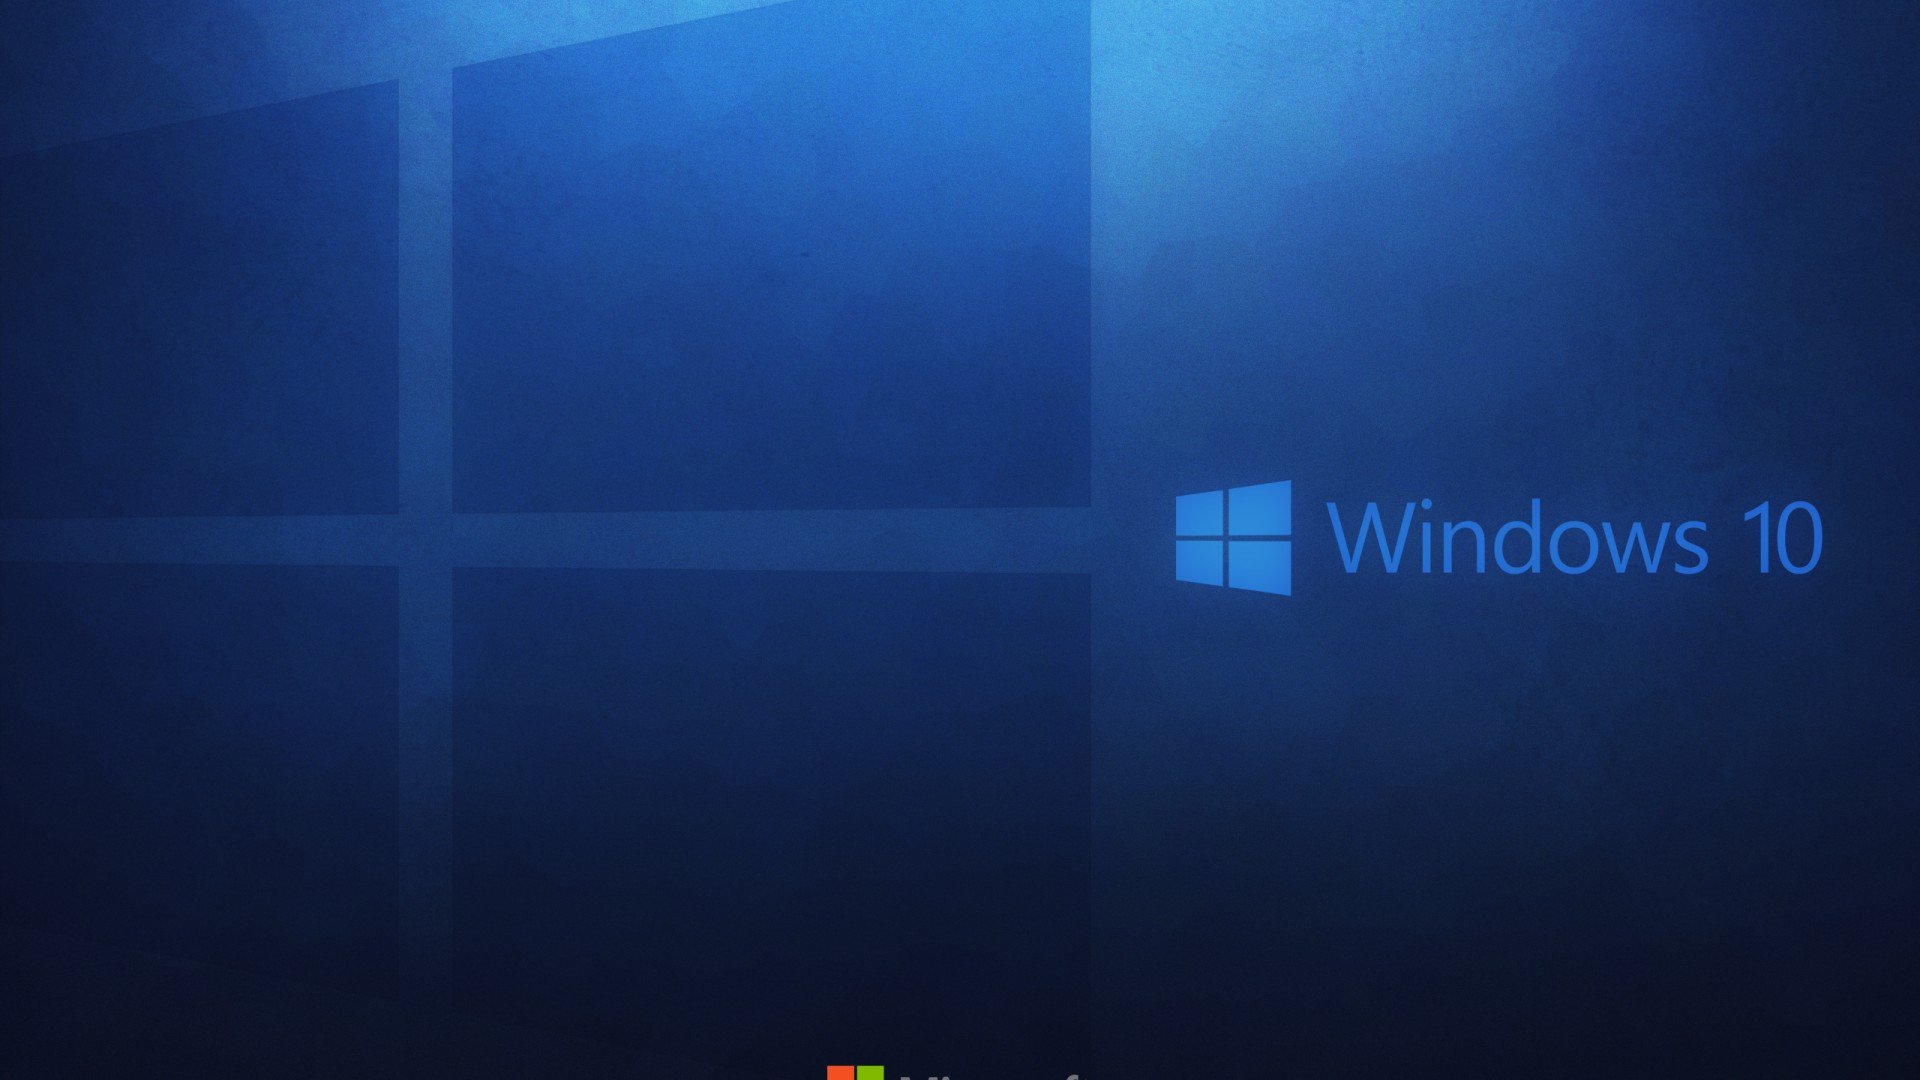 Windows 10 logo 1920x1080 1080p   Wallpaper   HD Wallpapers